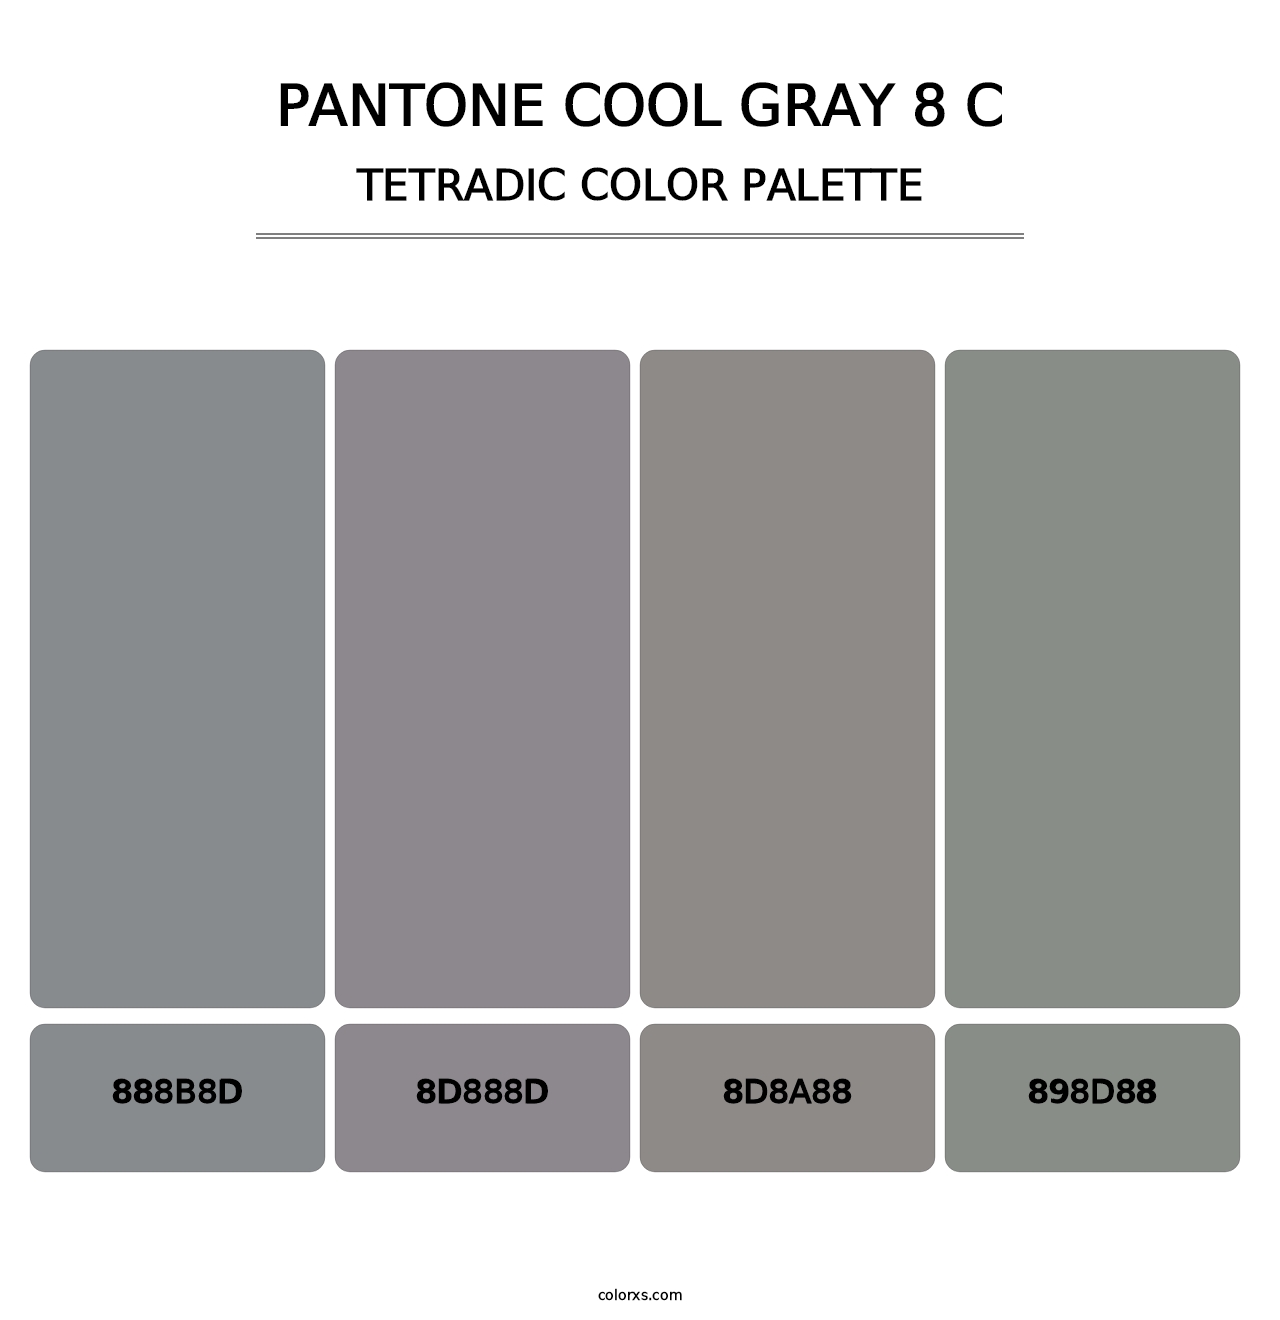 PANTONE Cool Gray 8 C - Tetradic Color Palette